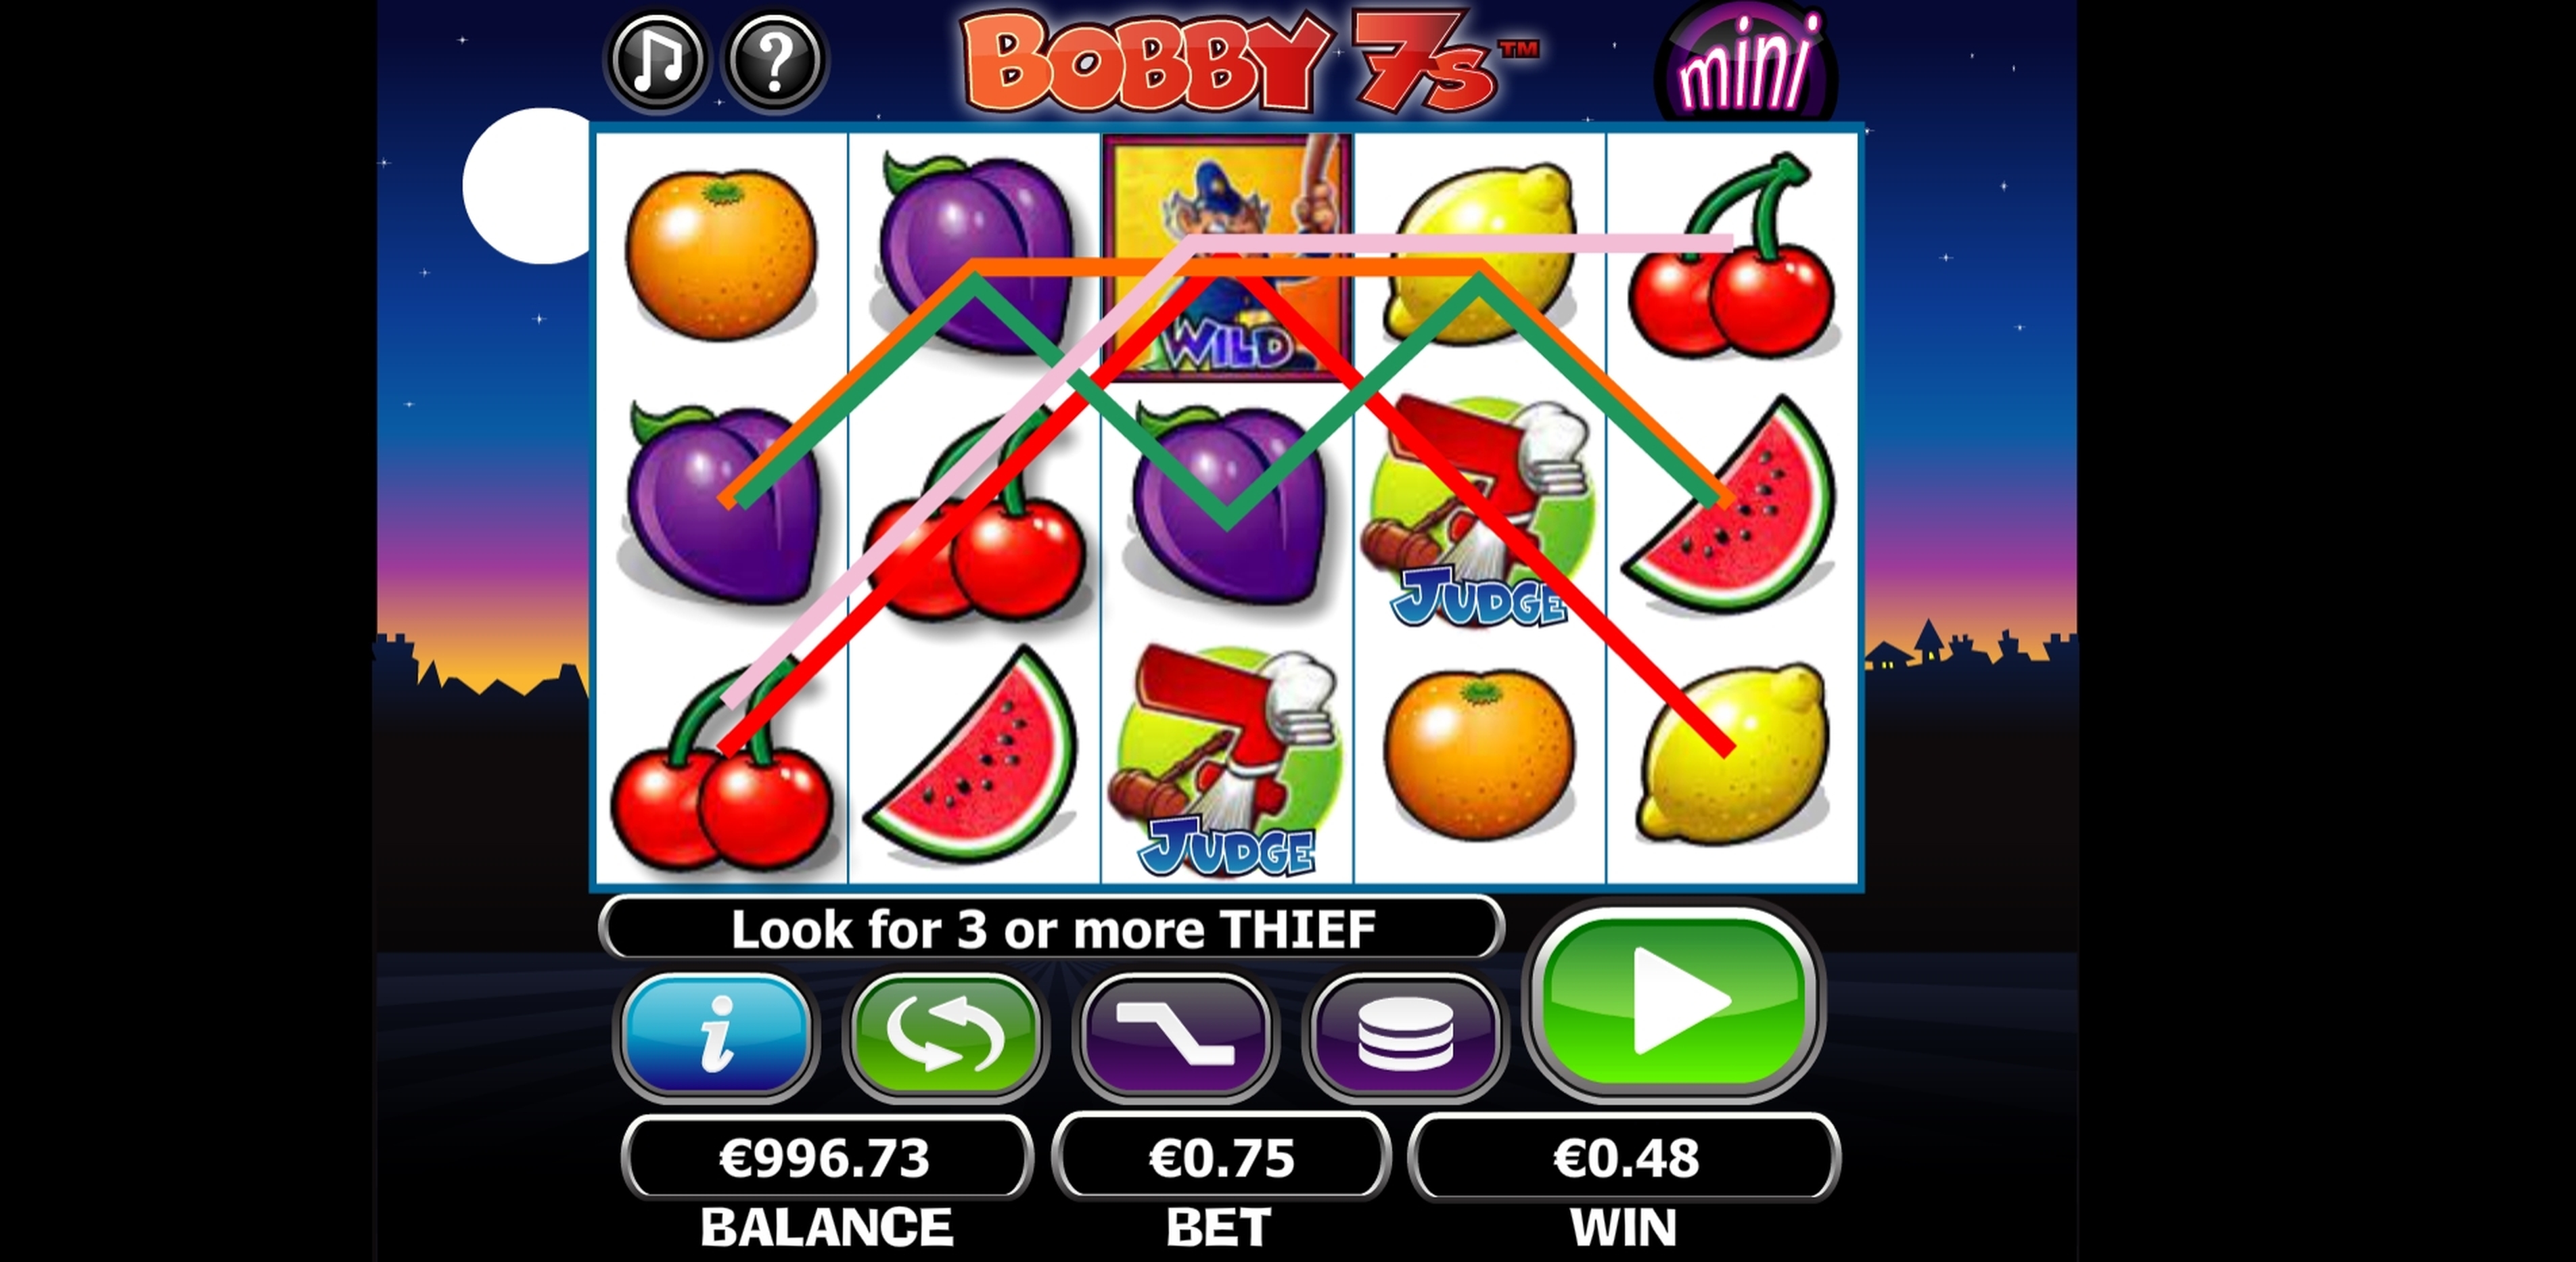 Win Money in Bobby 7s Mini Free Slot Game by NextGen Gaming